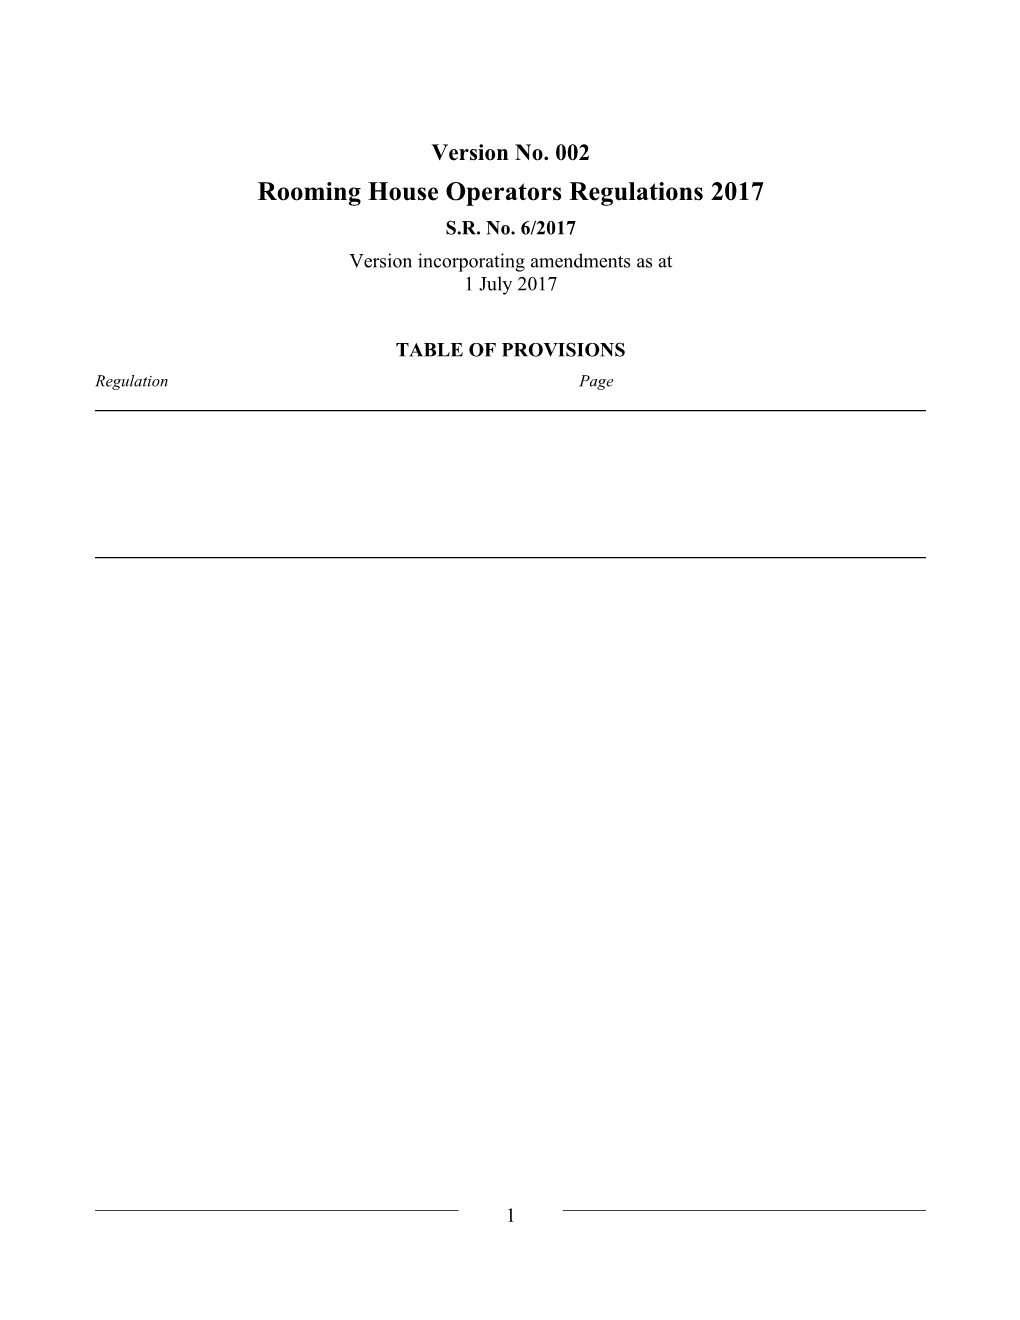 Rooming House Operators Regulations 2017